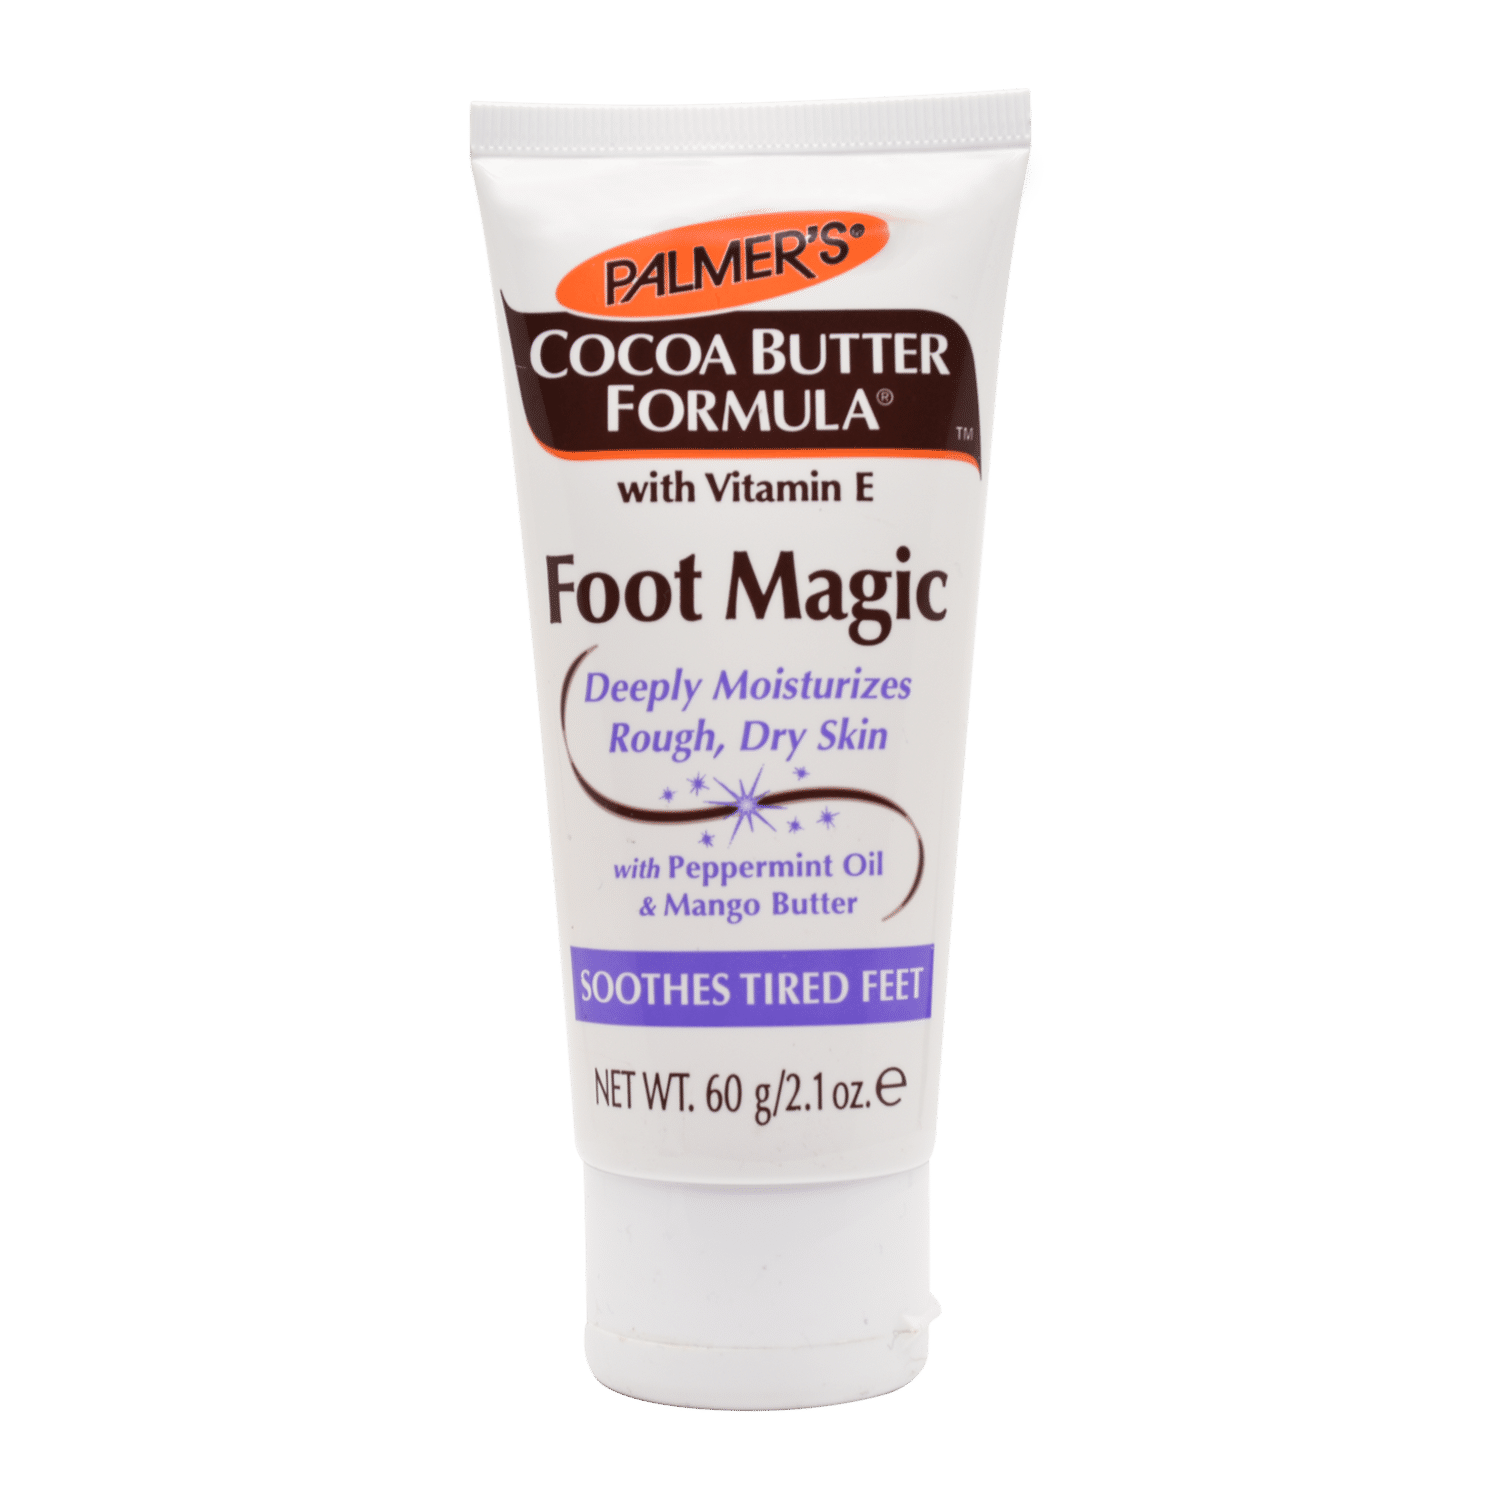 Palmer's Cocoa Butter Foot Magic - 60g